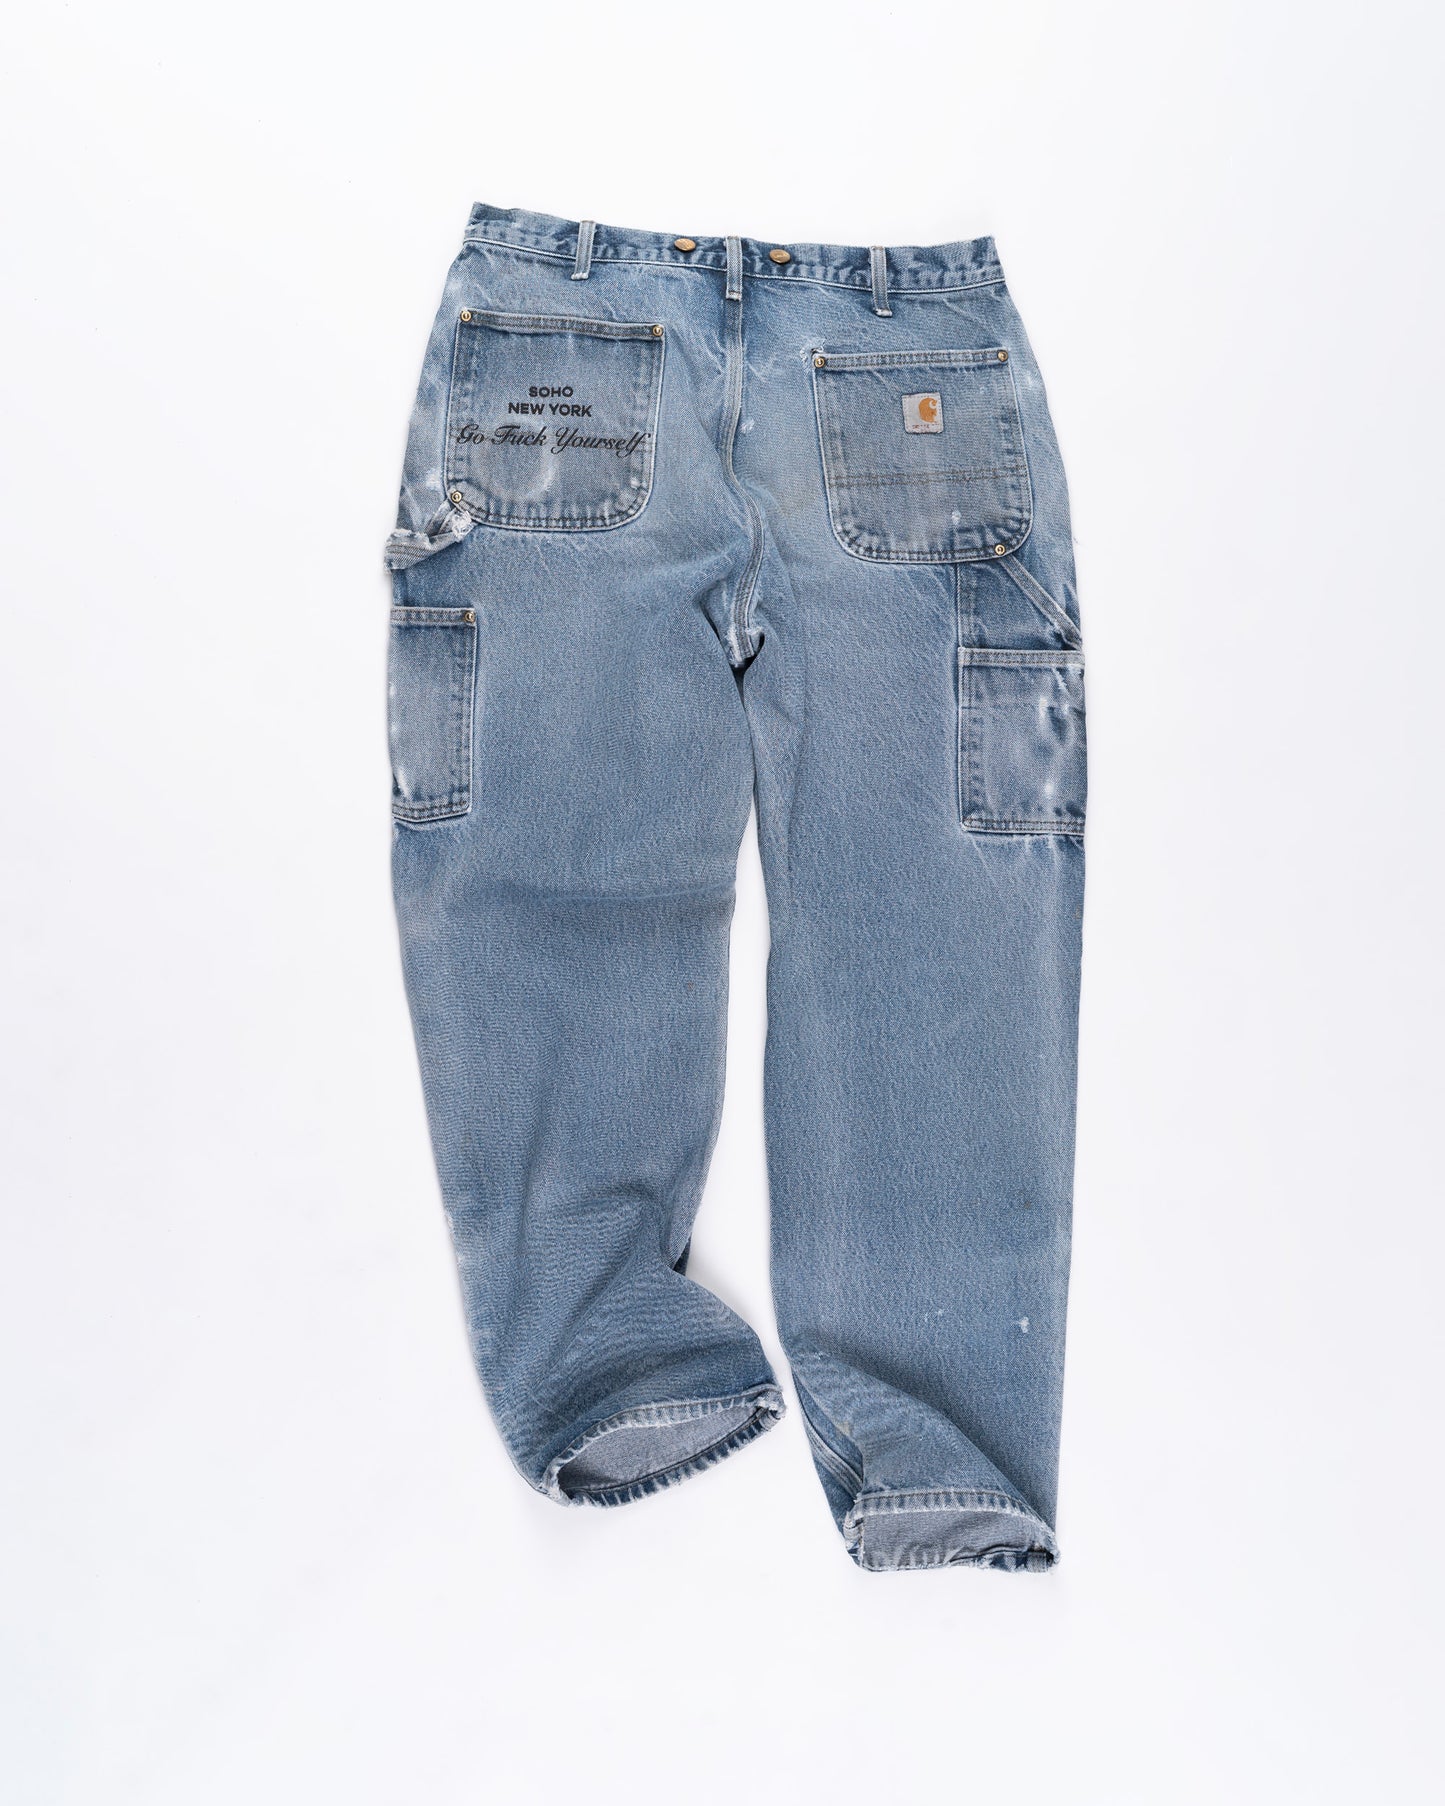 Blue Denim Carhart Cargo Pants Size: 36